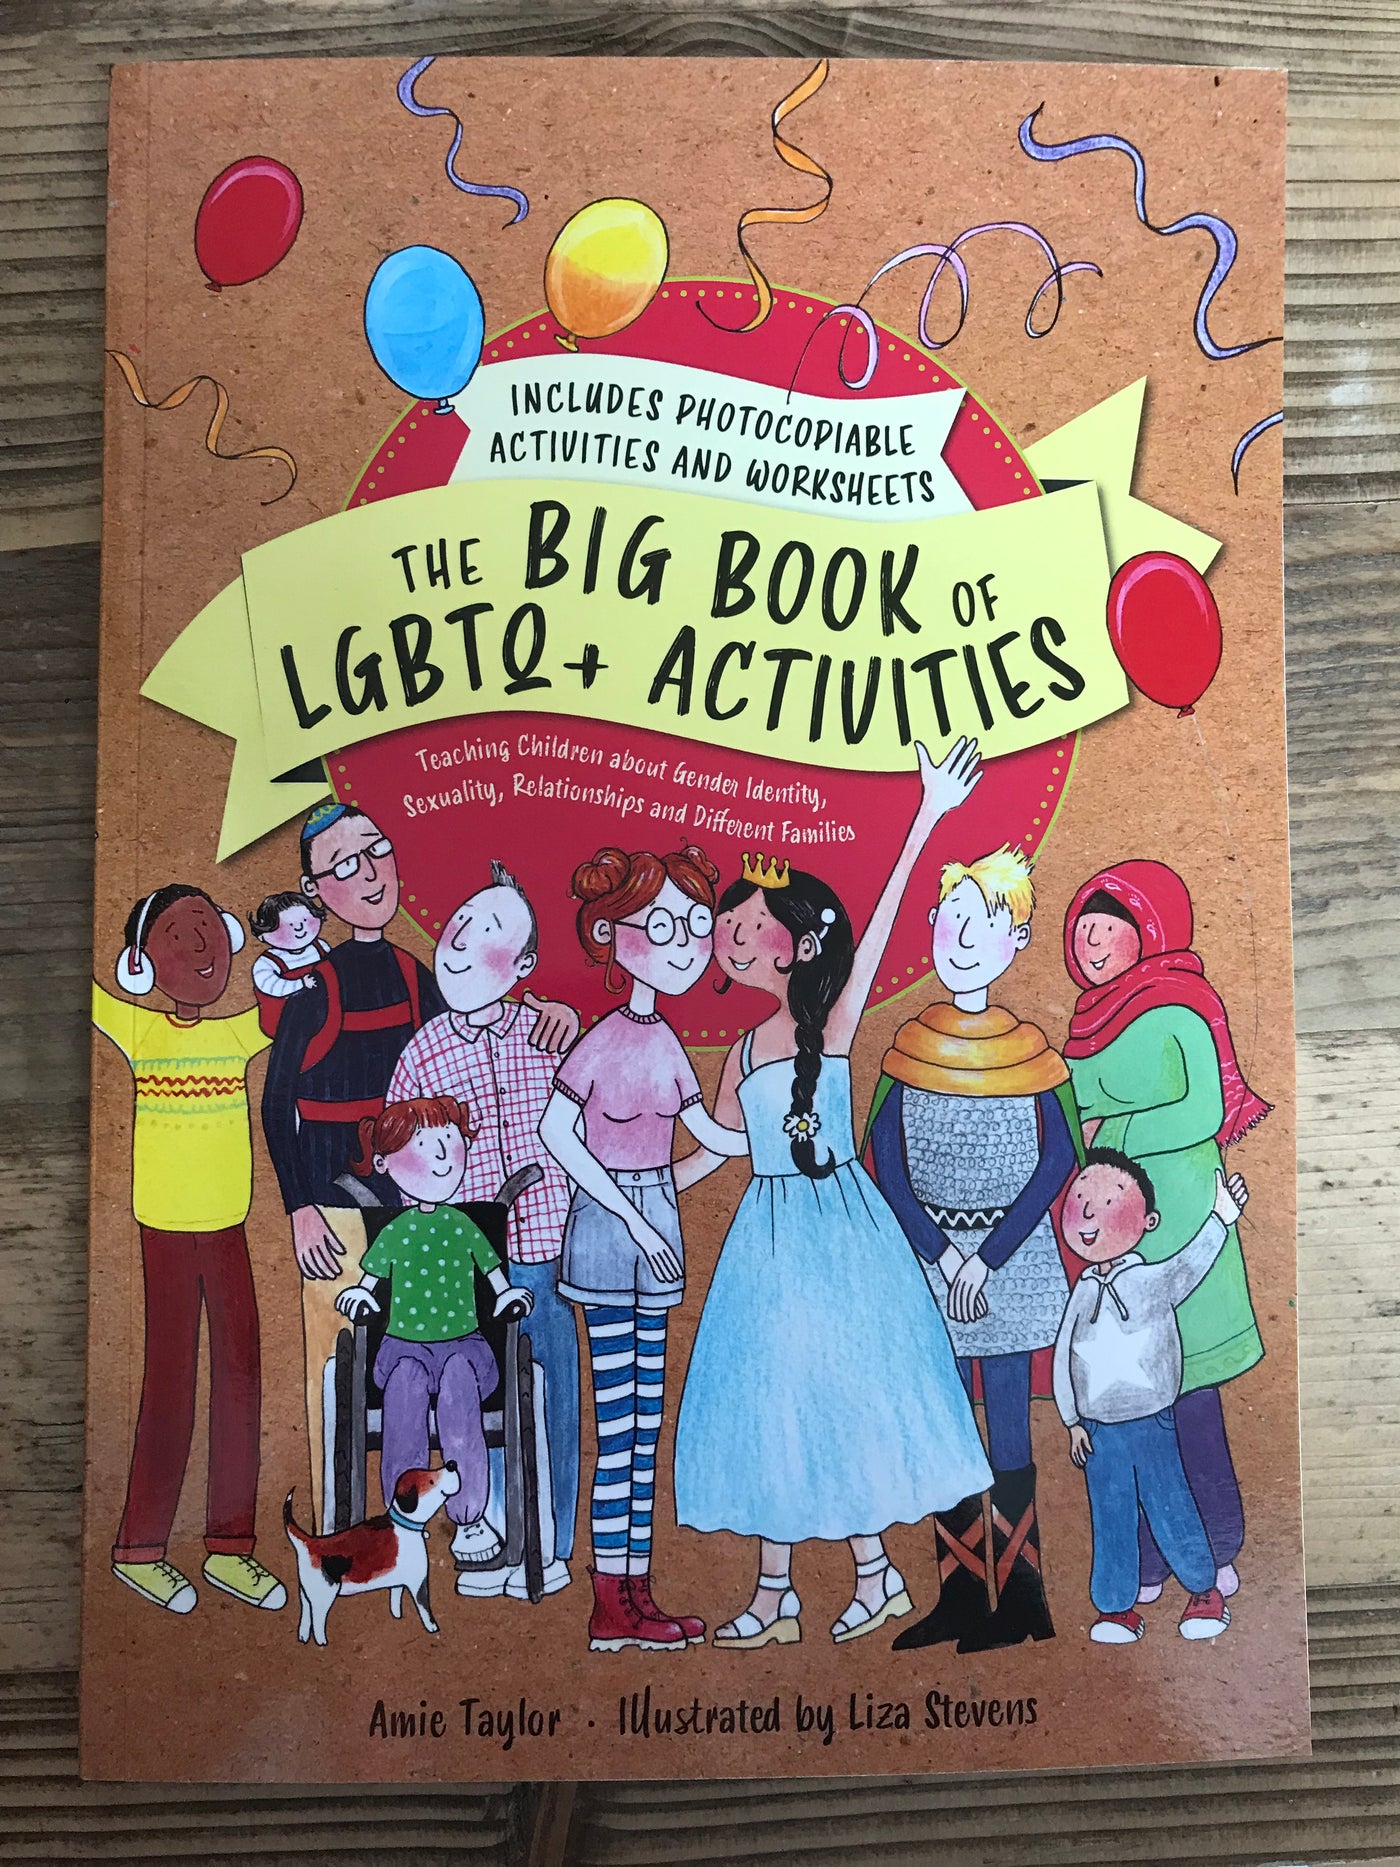 The Big Book of LGBTQ+ Activities